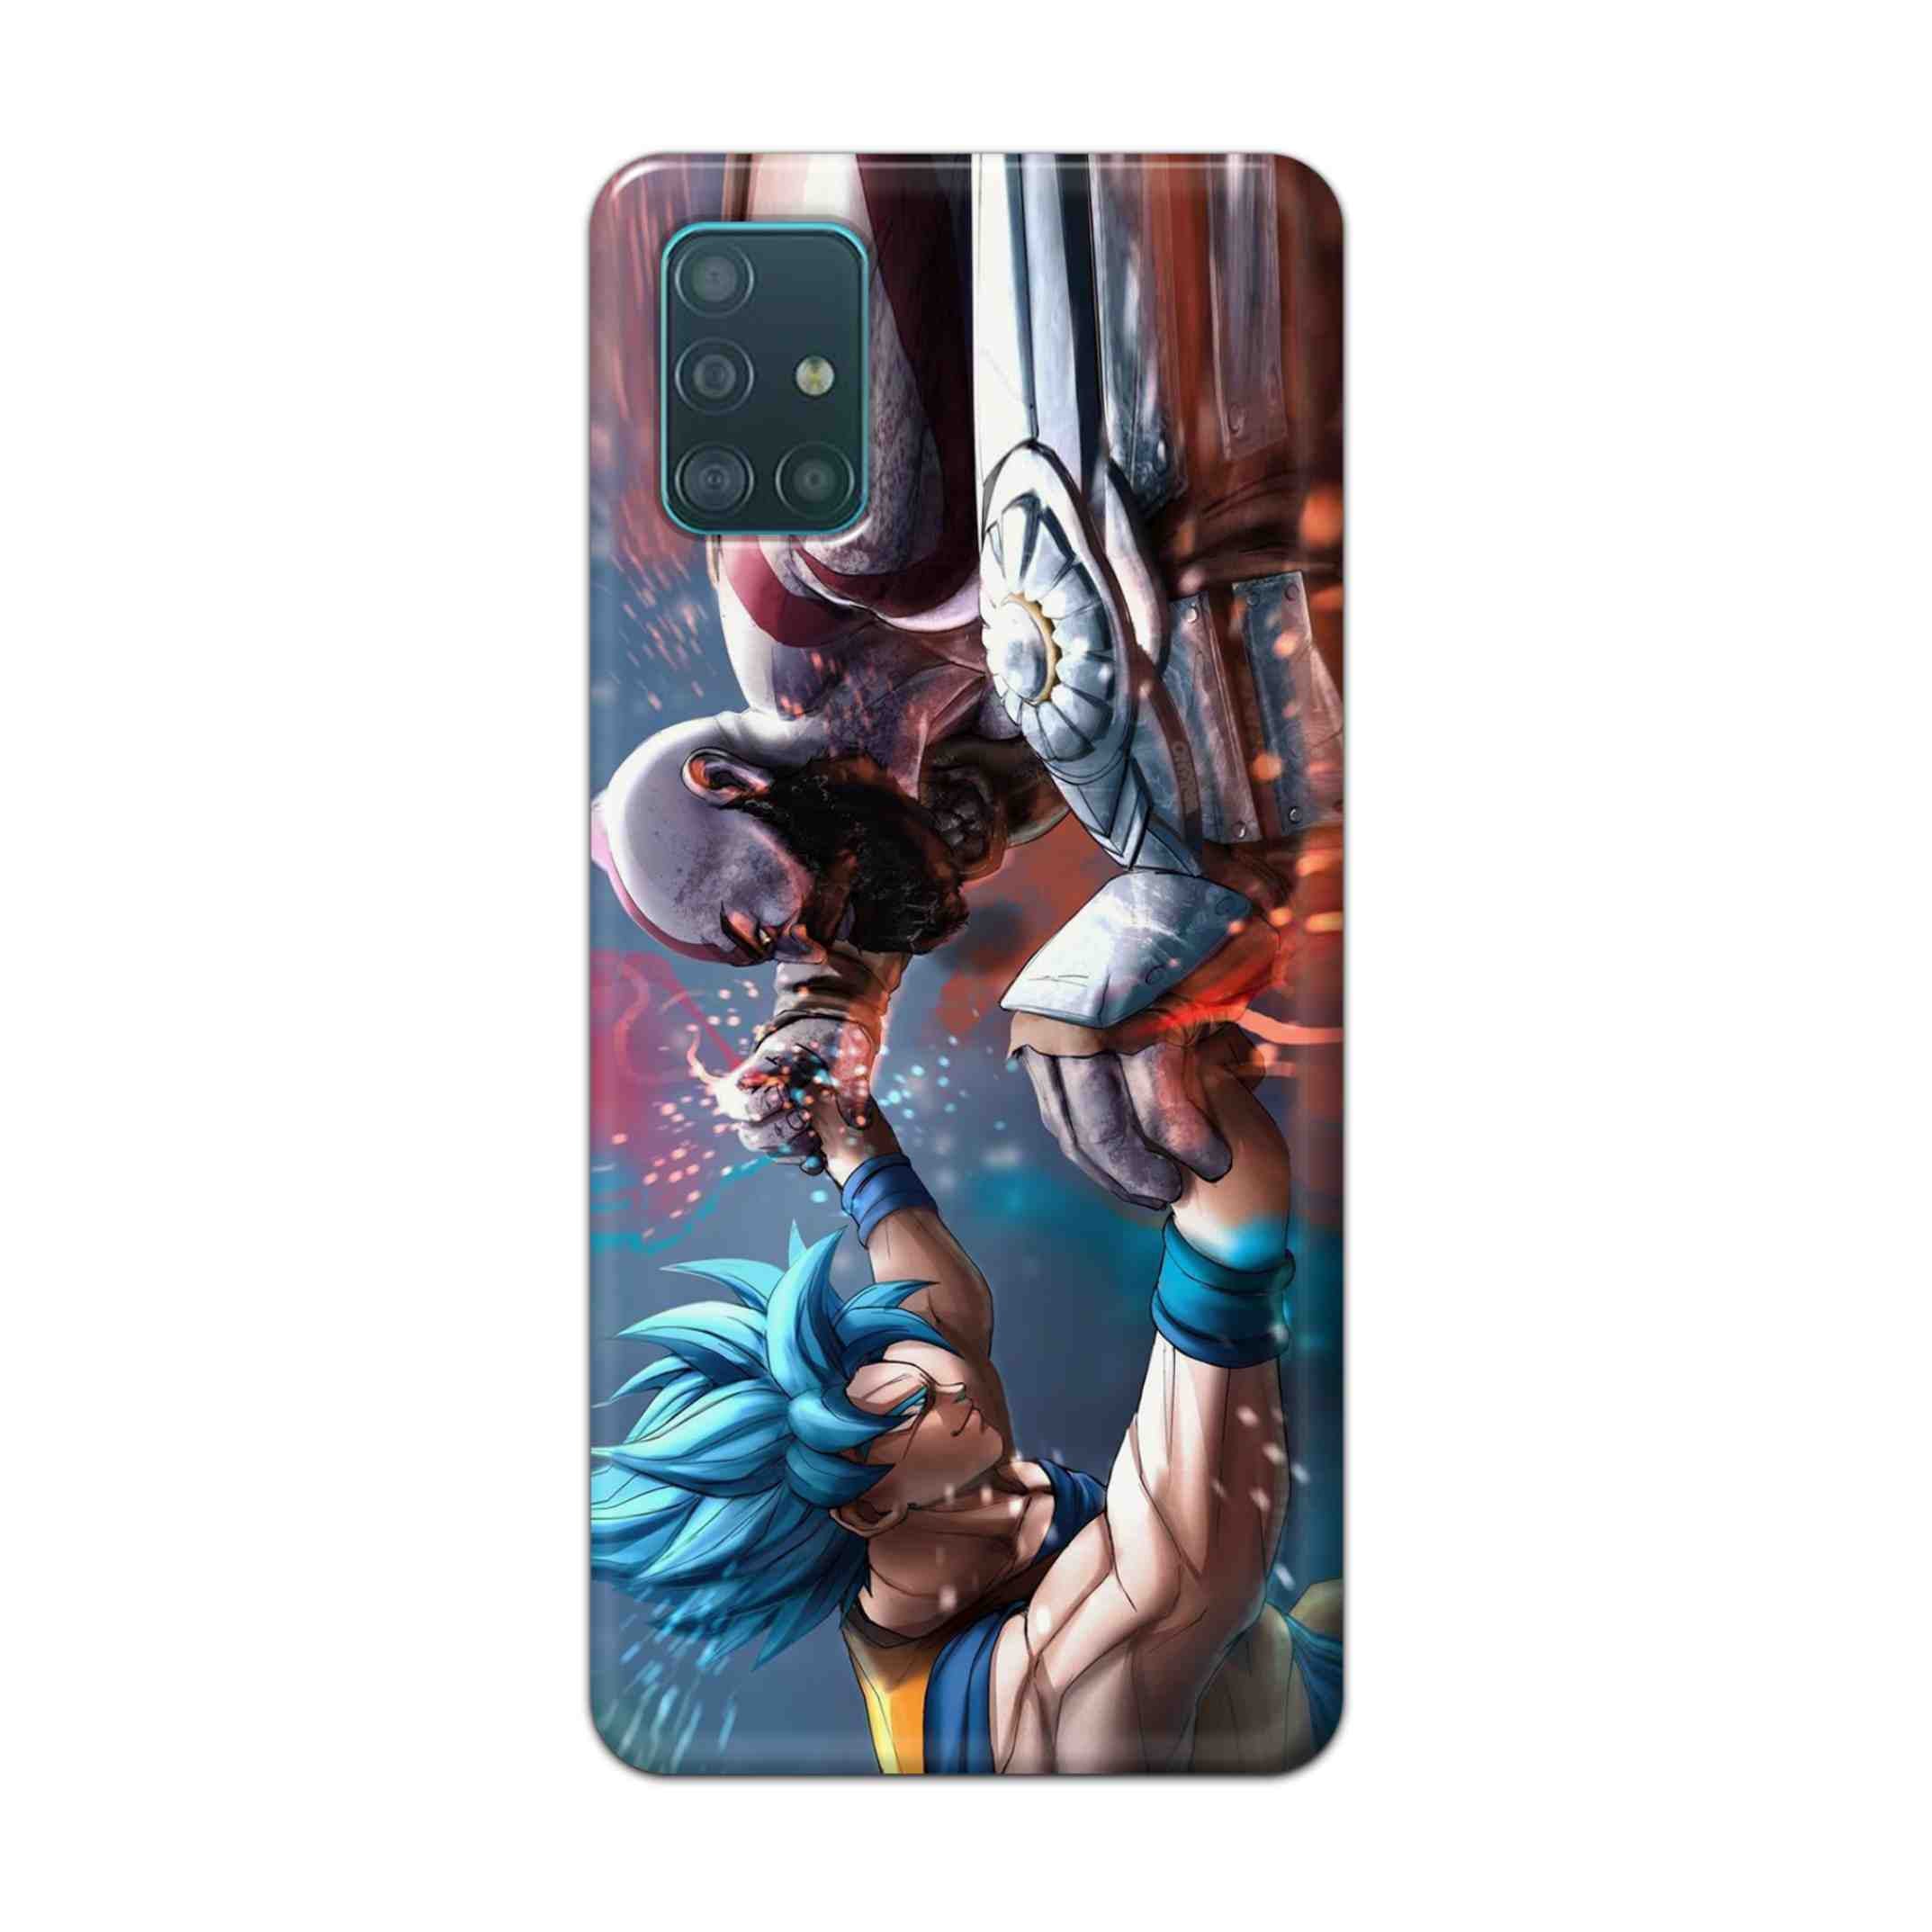 Buy Goku Vs Kratos Hard Back Mobile Phone Case Cover For Samsung A51 Online